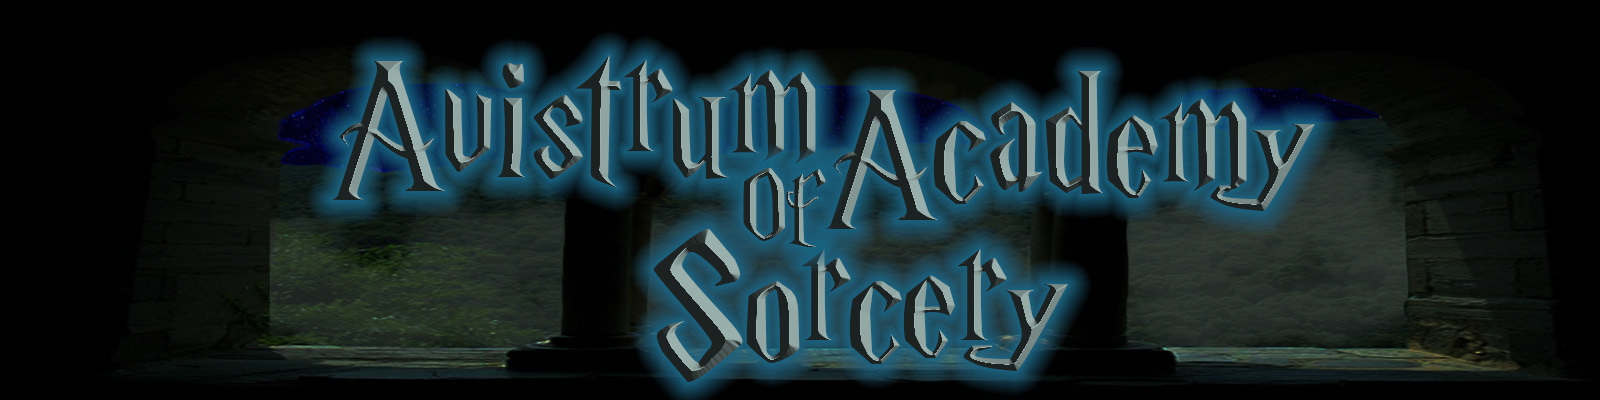 Avistrum Academy of Sorcery